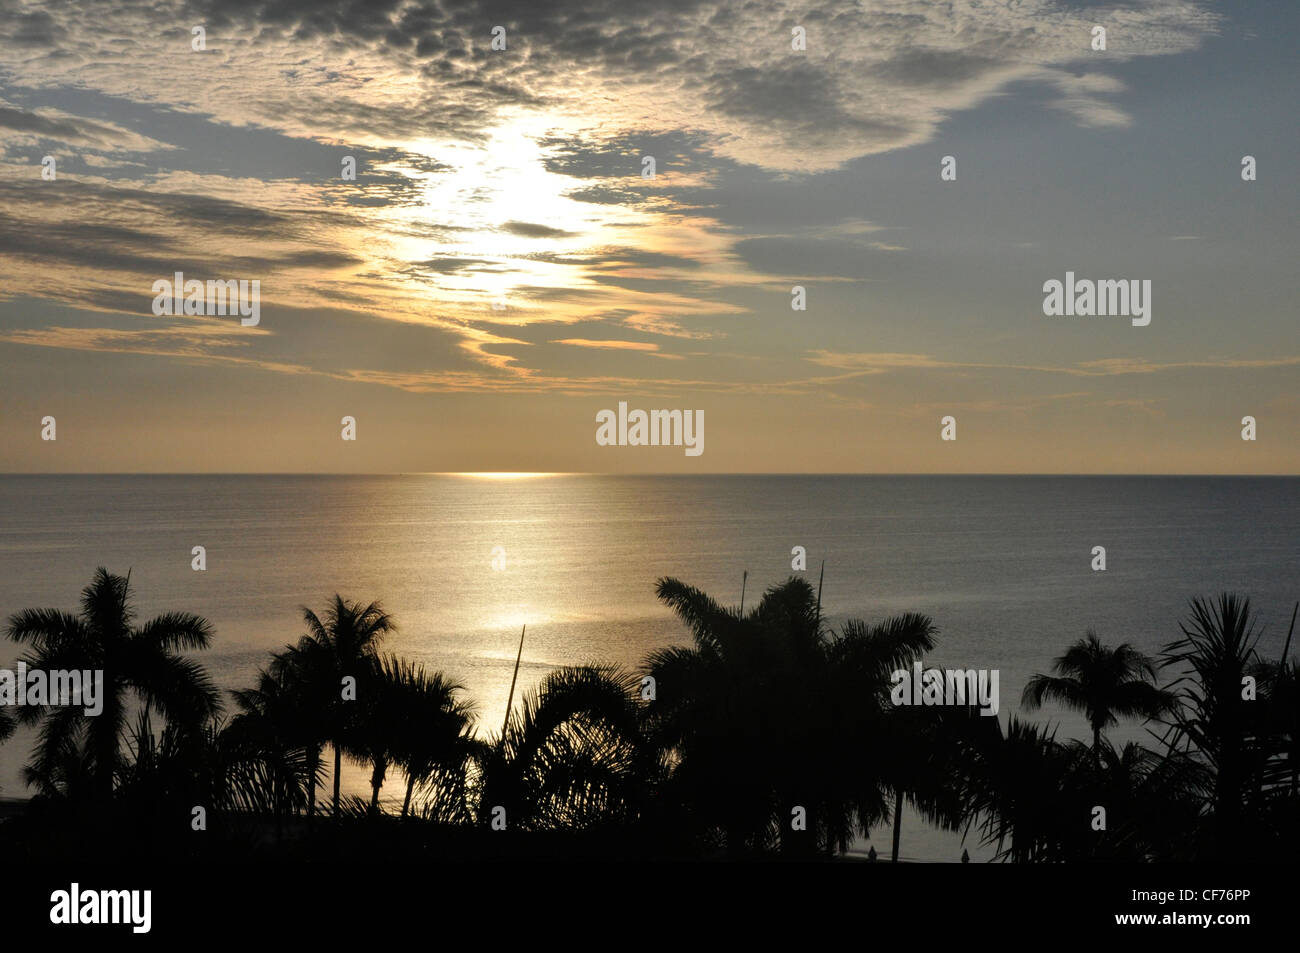 Summer evening Sun clouds drama seascape palms in silhouette Stock Photo